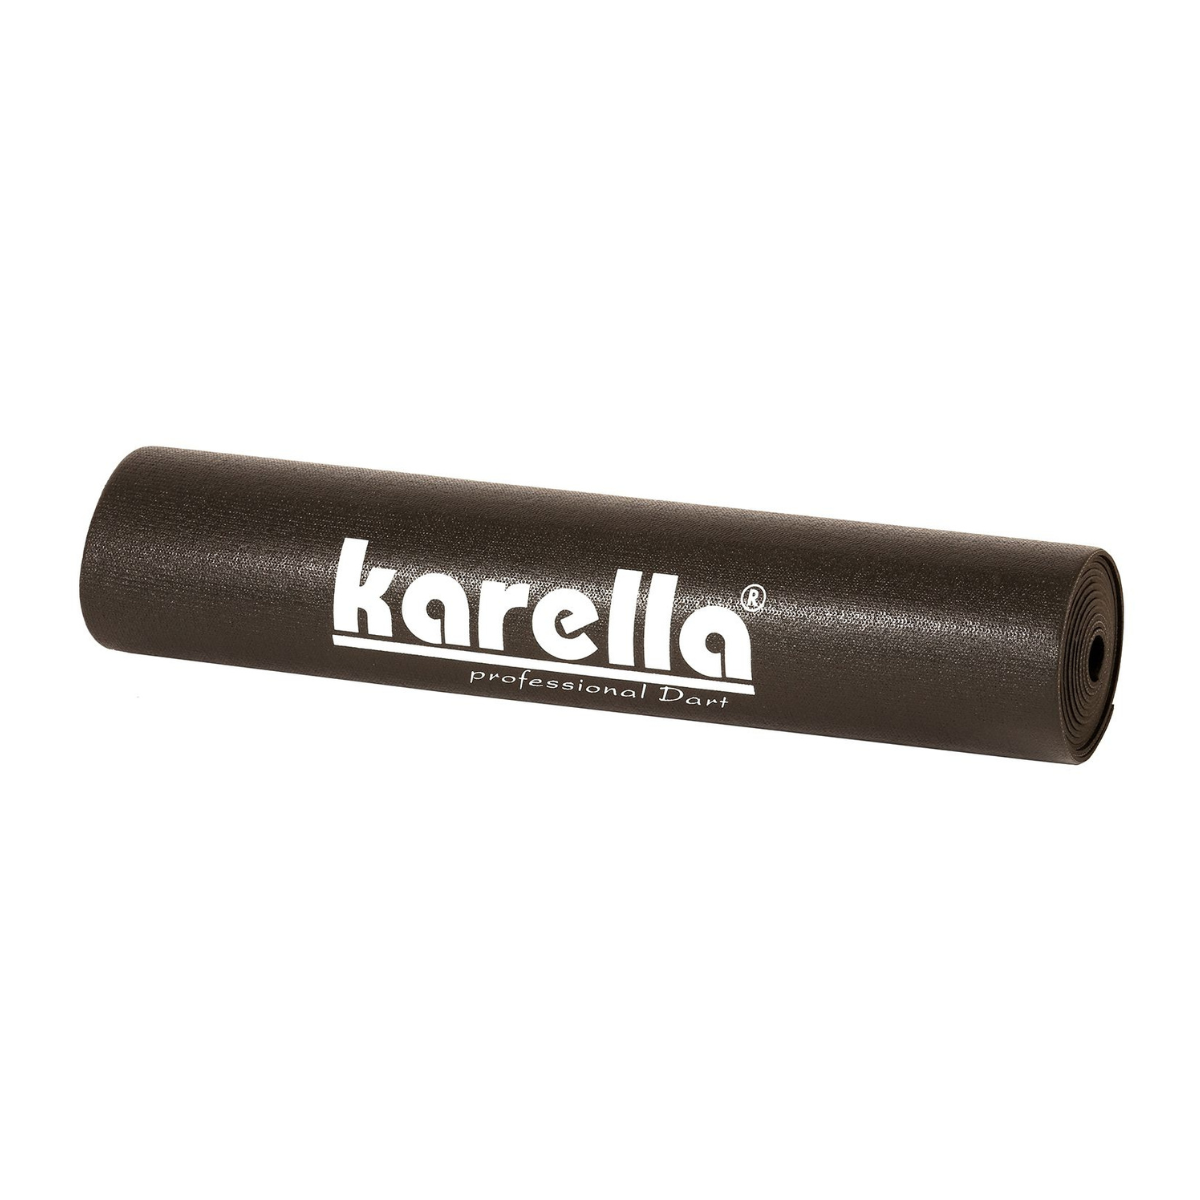 Karella Dartboard Mat Eco Star